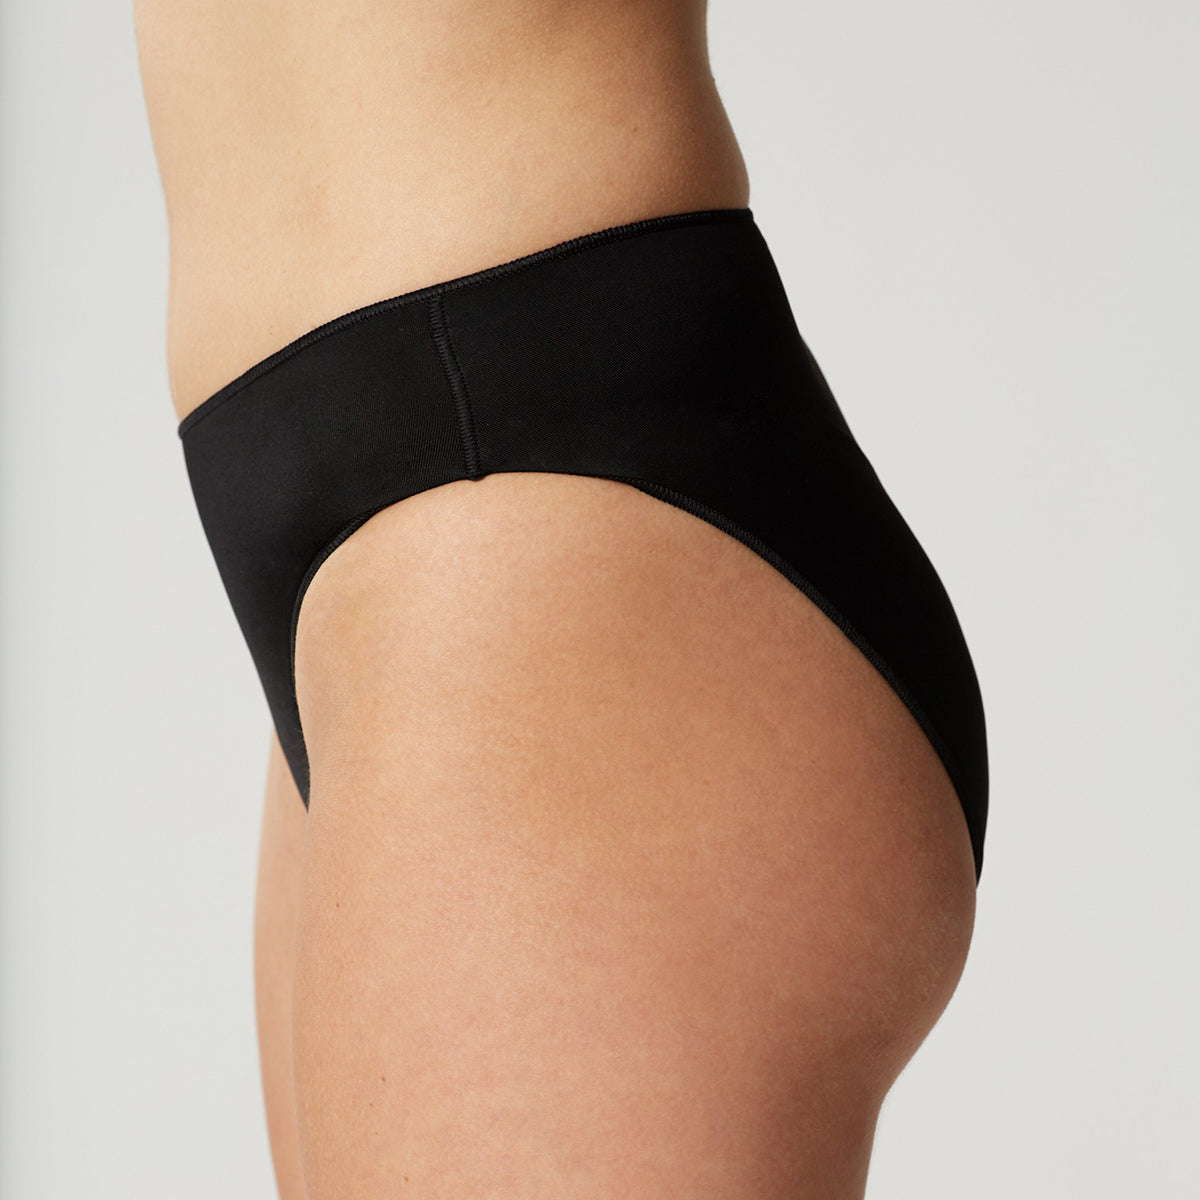 LBECLEY French Cut Underwear for Women Ladies Underwear Stretch